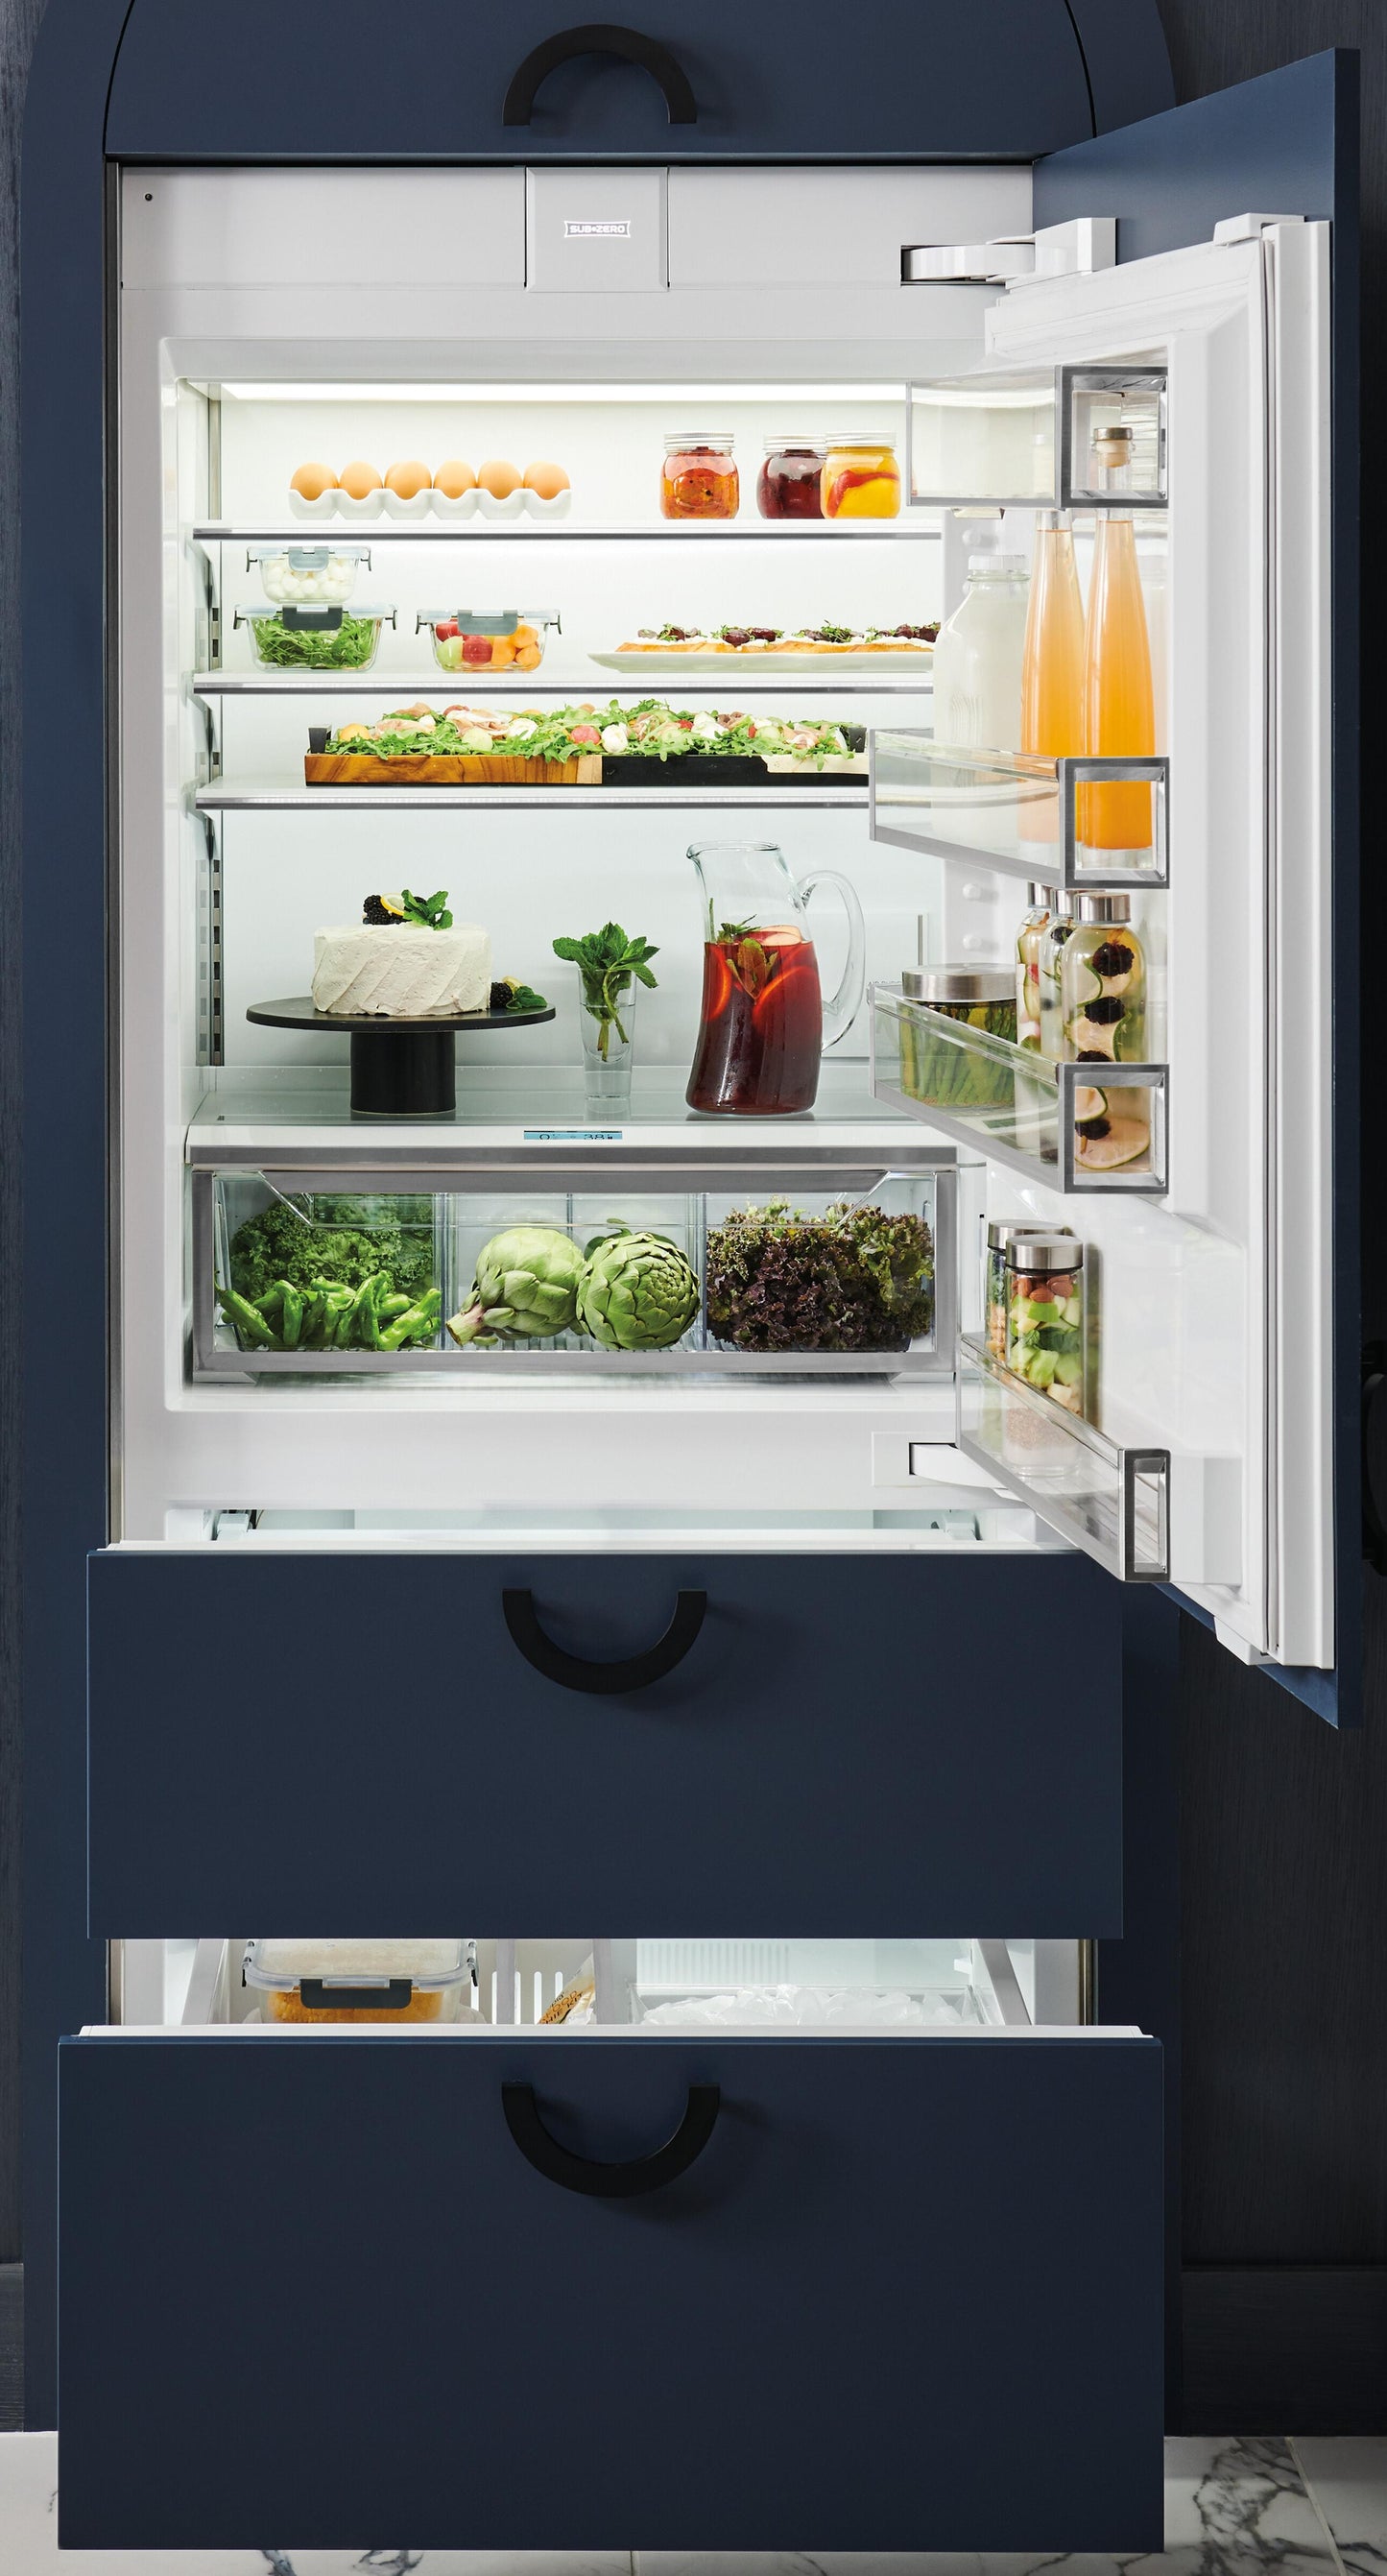 Sub-Zero DET3650CIL 36" Designer Over-And-Under Refrigerator/Freezer With Ice Maker - Panel Ready